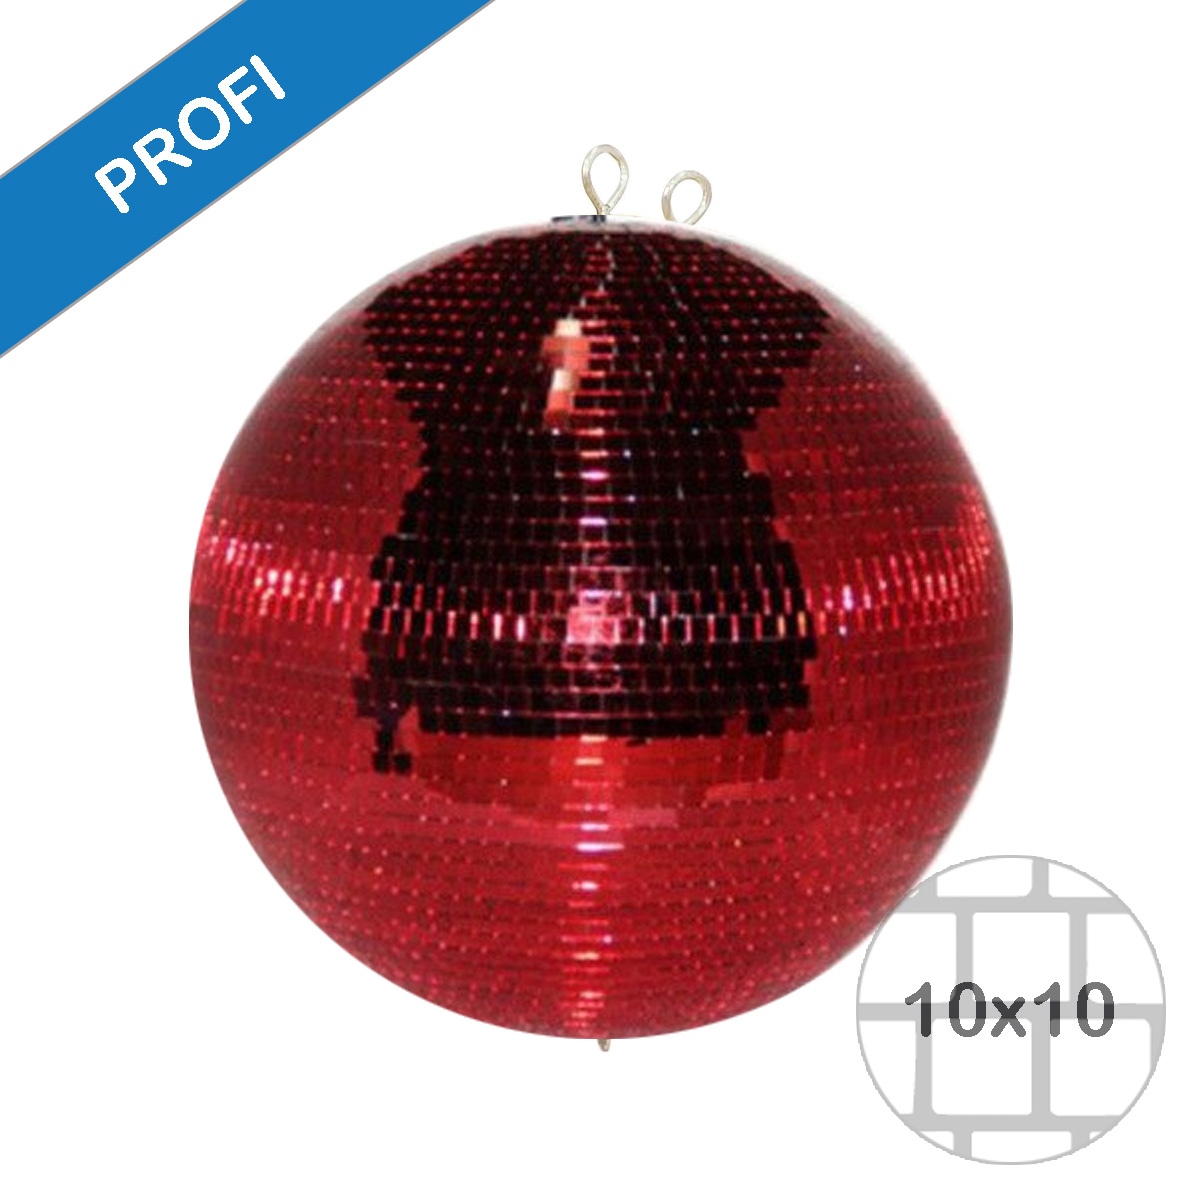 Spiegelkugel 30cm farbig rot- Diskokugel (Discokugel) Party Lichteffekt - Echtglas - mirrorball red color